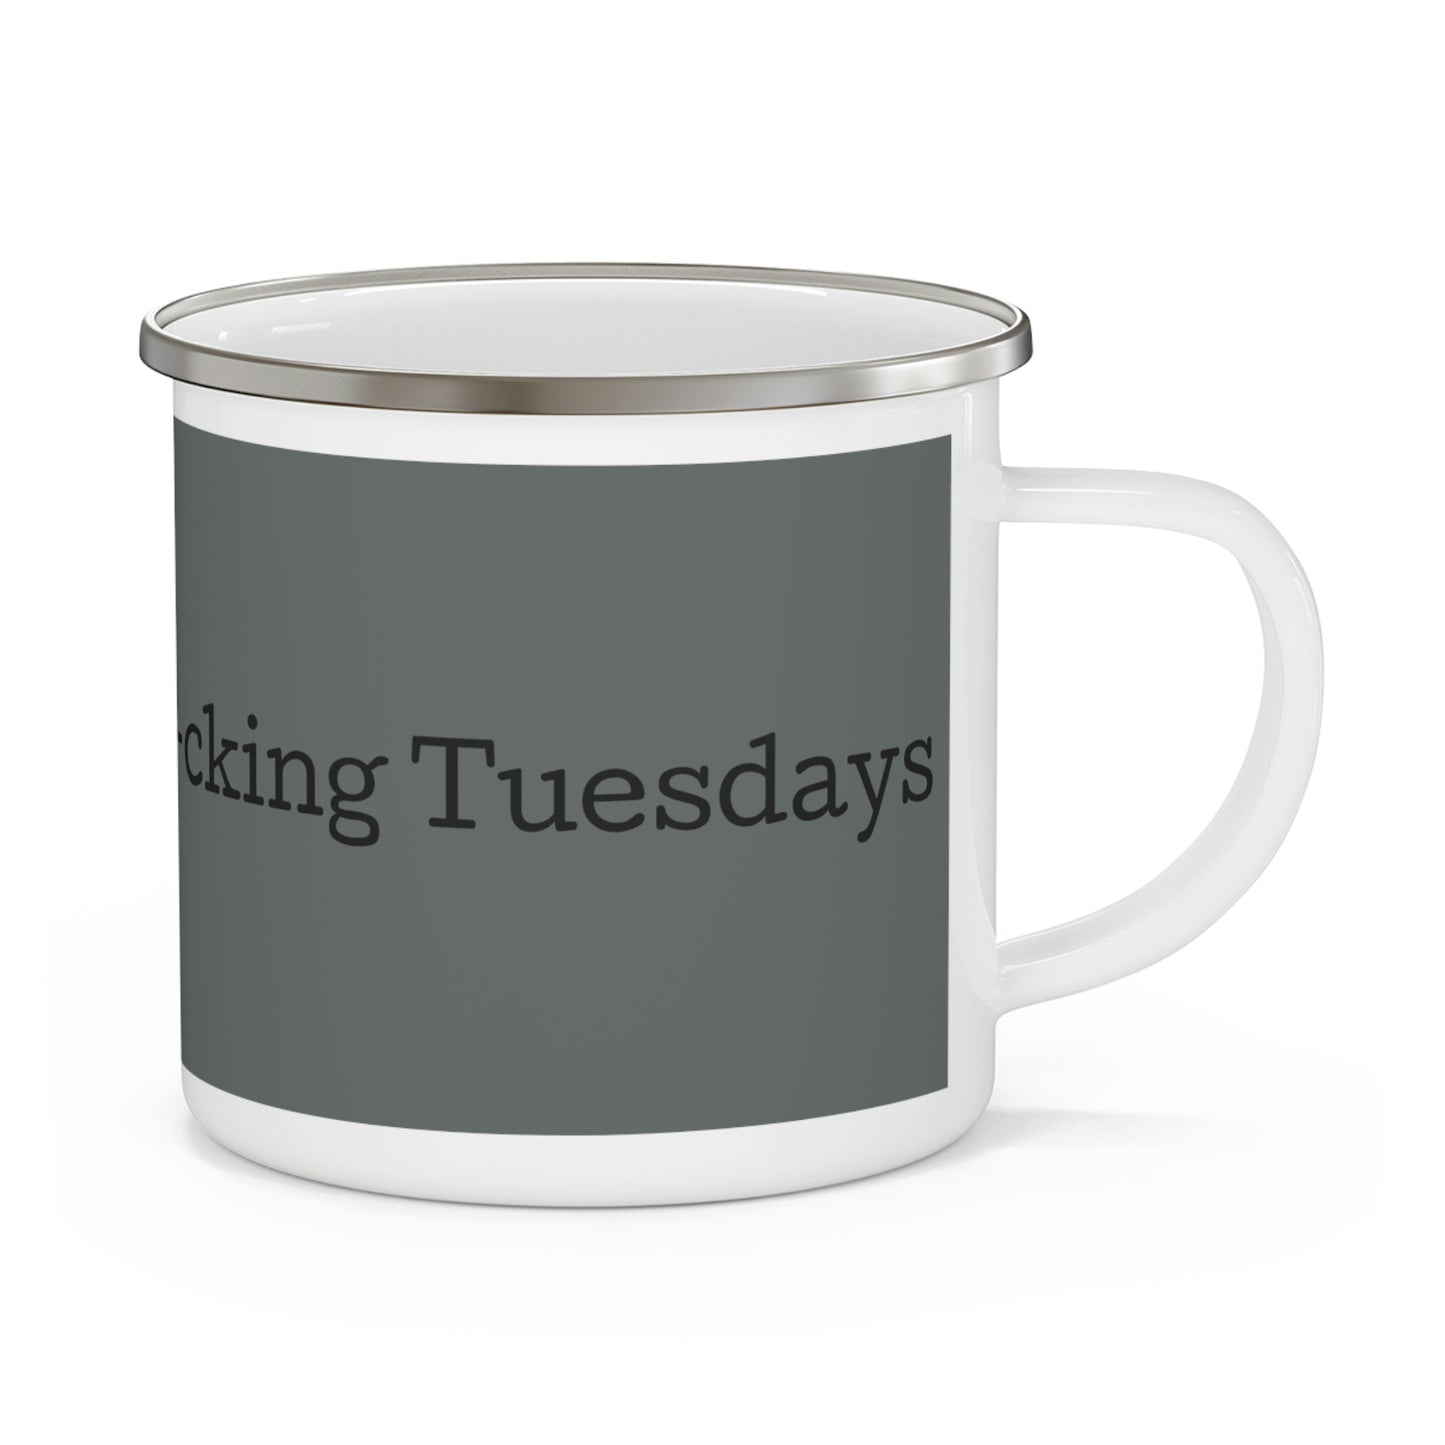 F-cking Tuesdays enamel mug